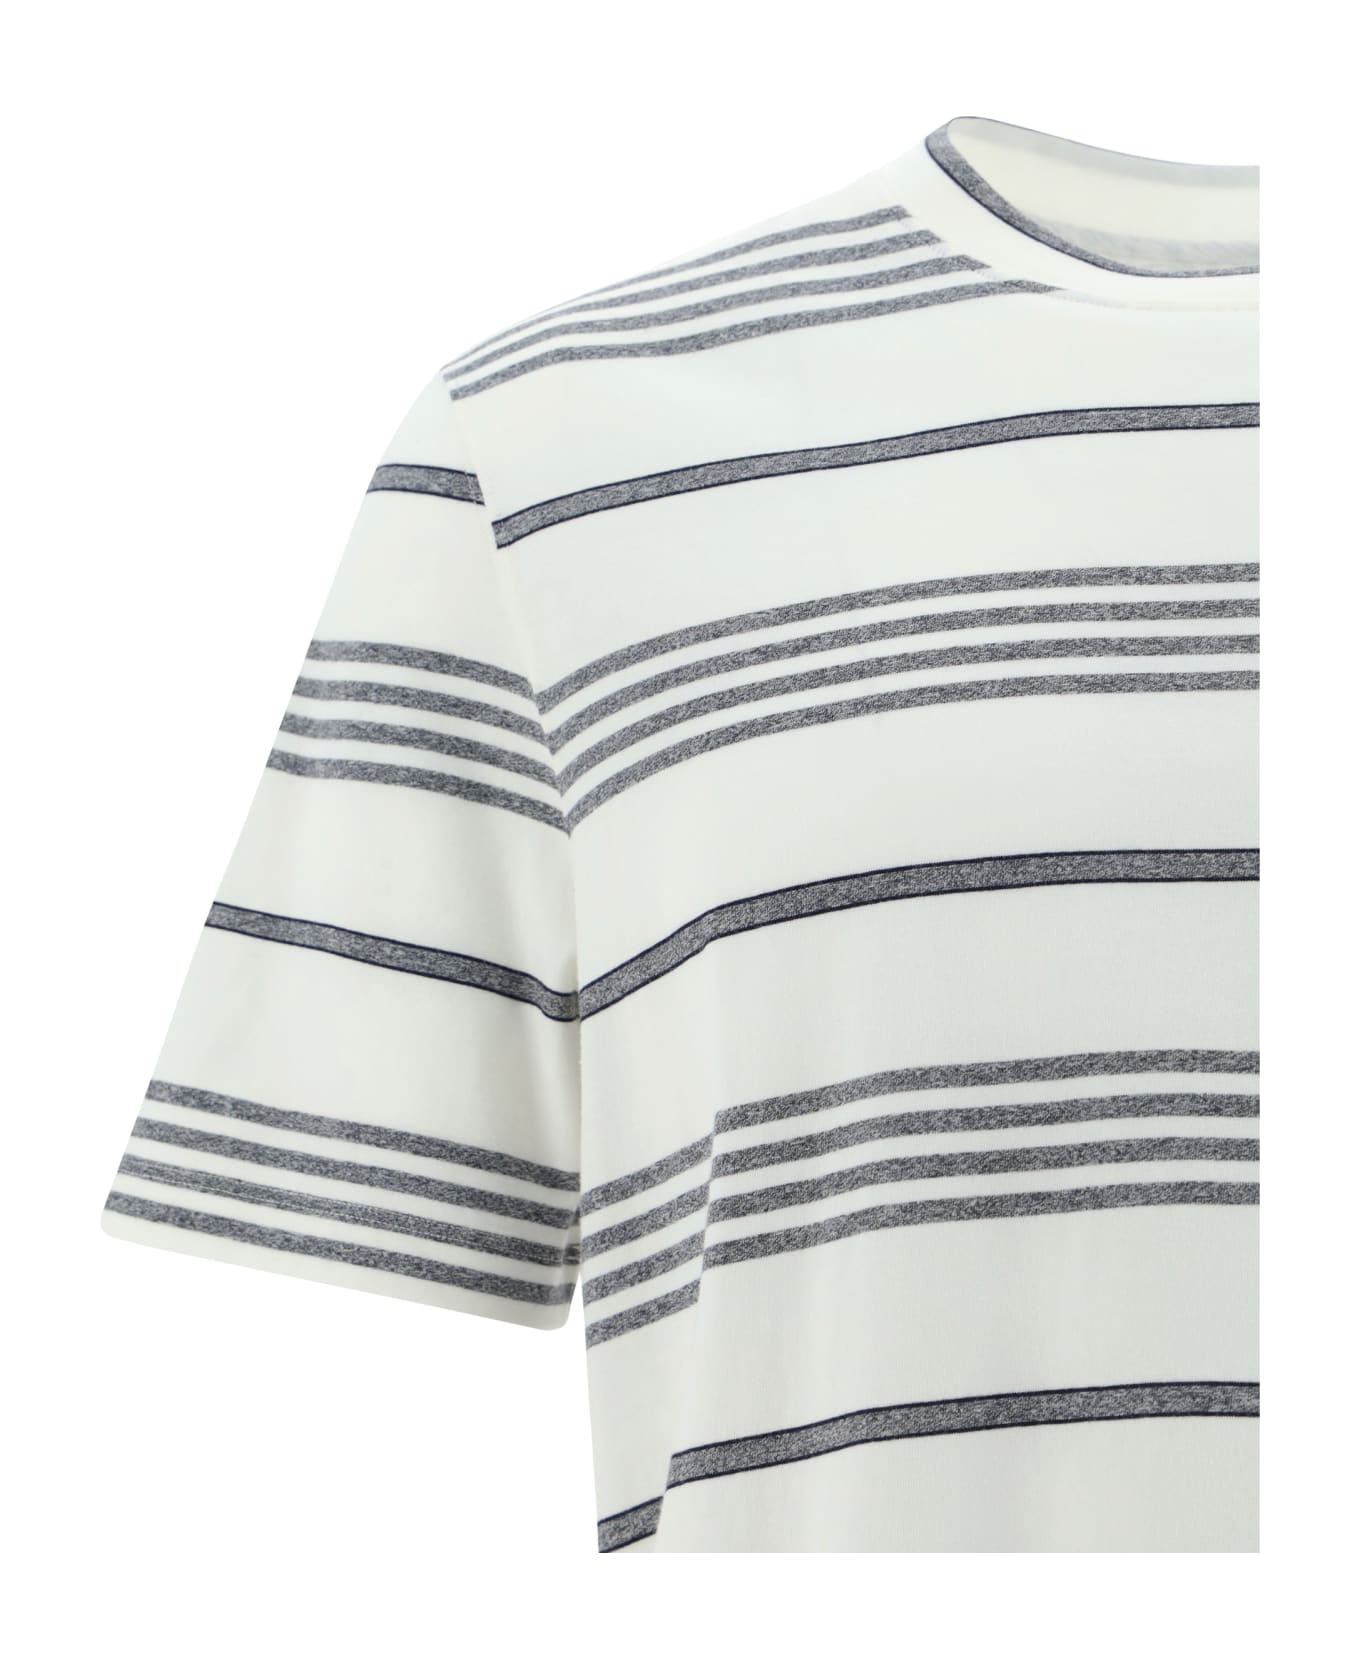 Brunello Cucinelli Cotton T-shirt - Off White/grigio/blu シャツ